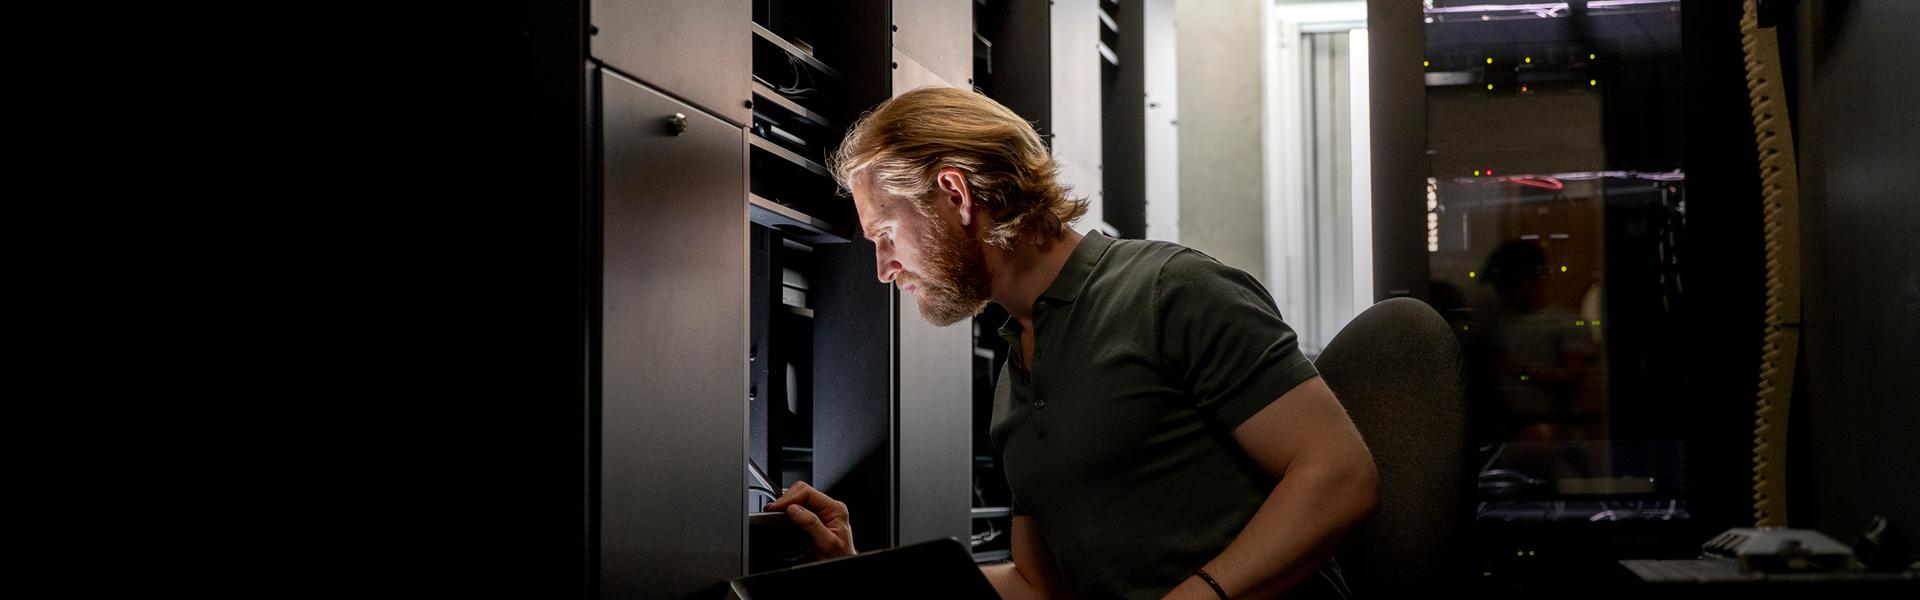 man looking at an unseen computer screen in a data center